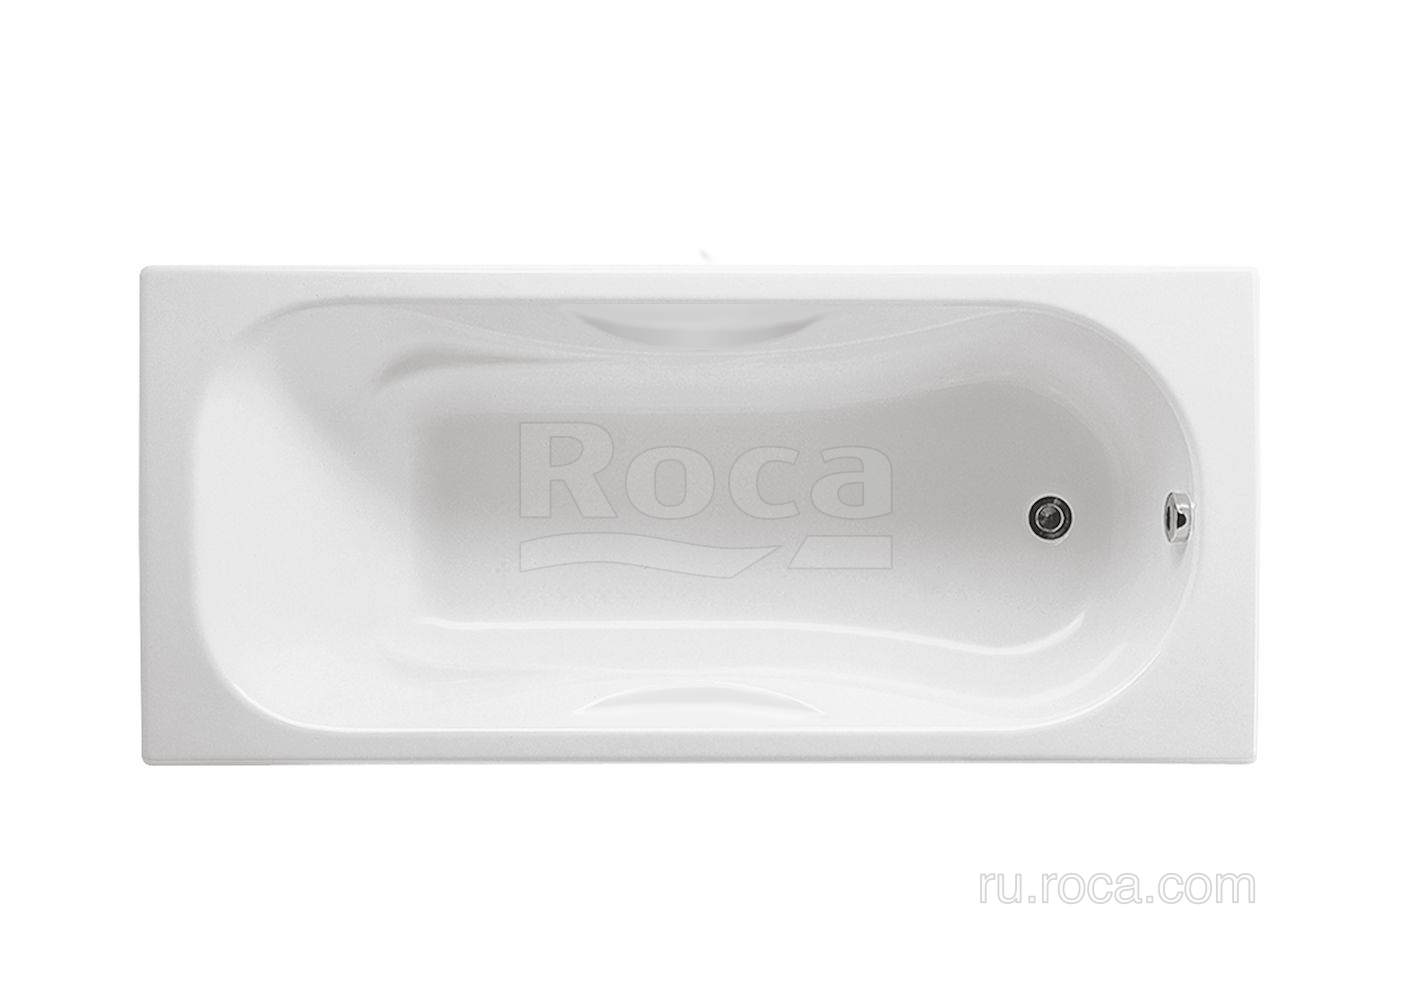 Чугунная ванна Roca Malibu 150x75 без отверстий для ручек, anti-slip 231560000